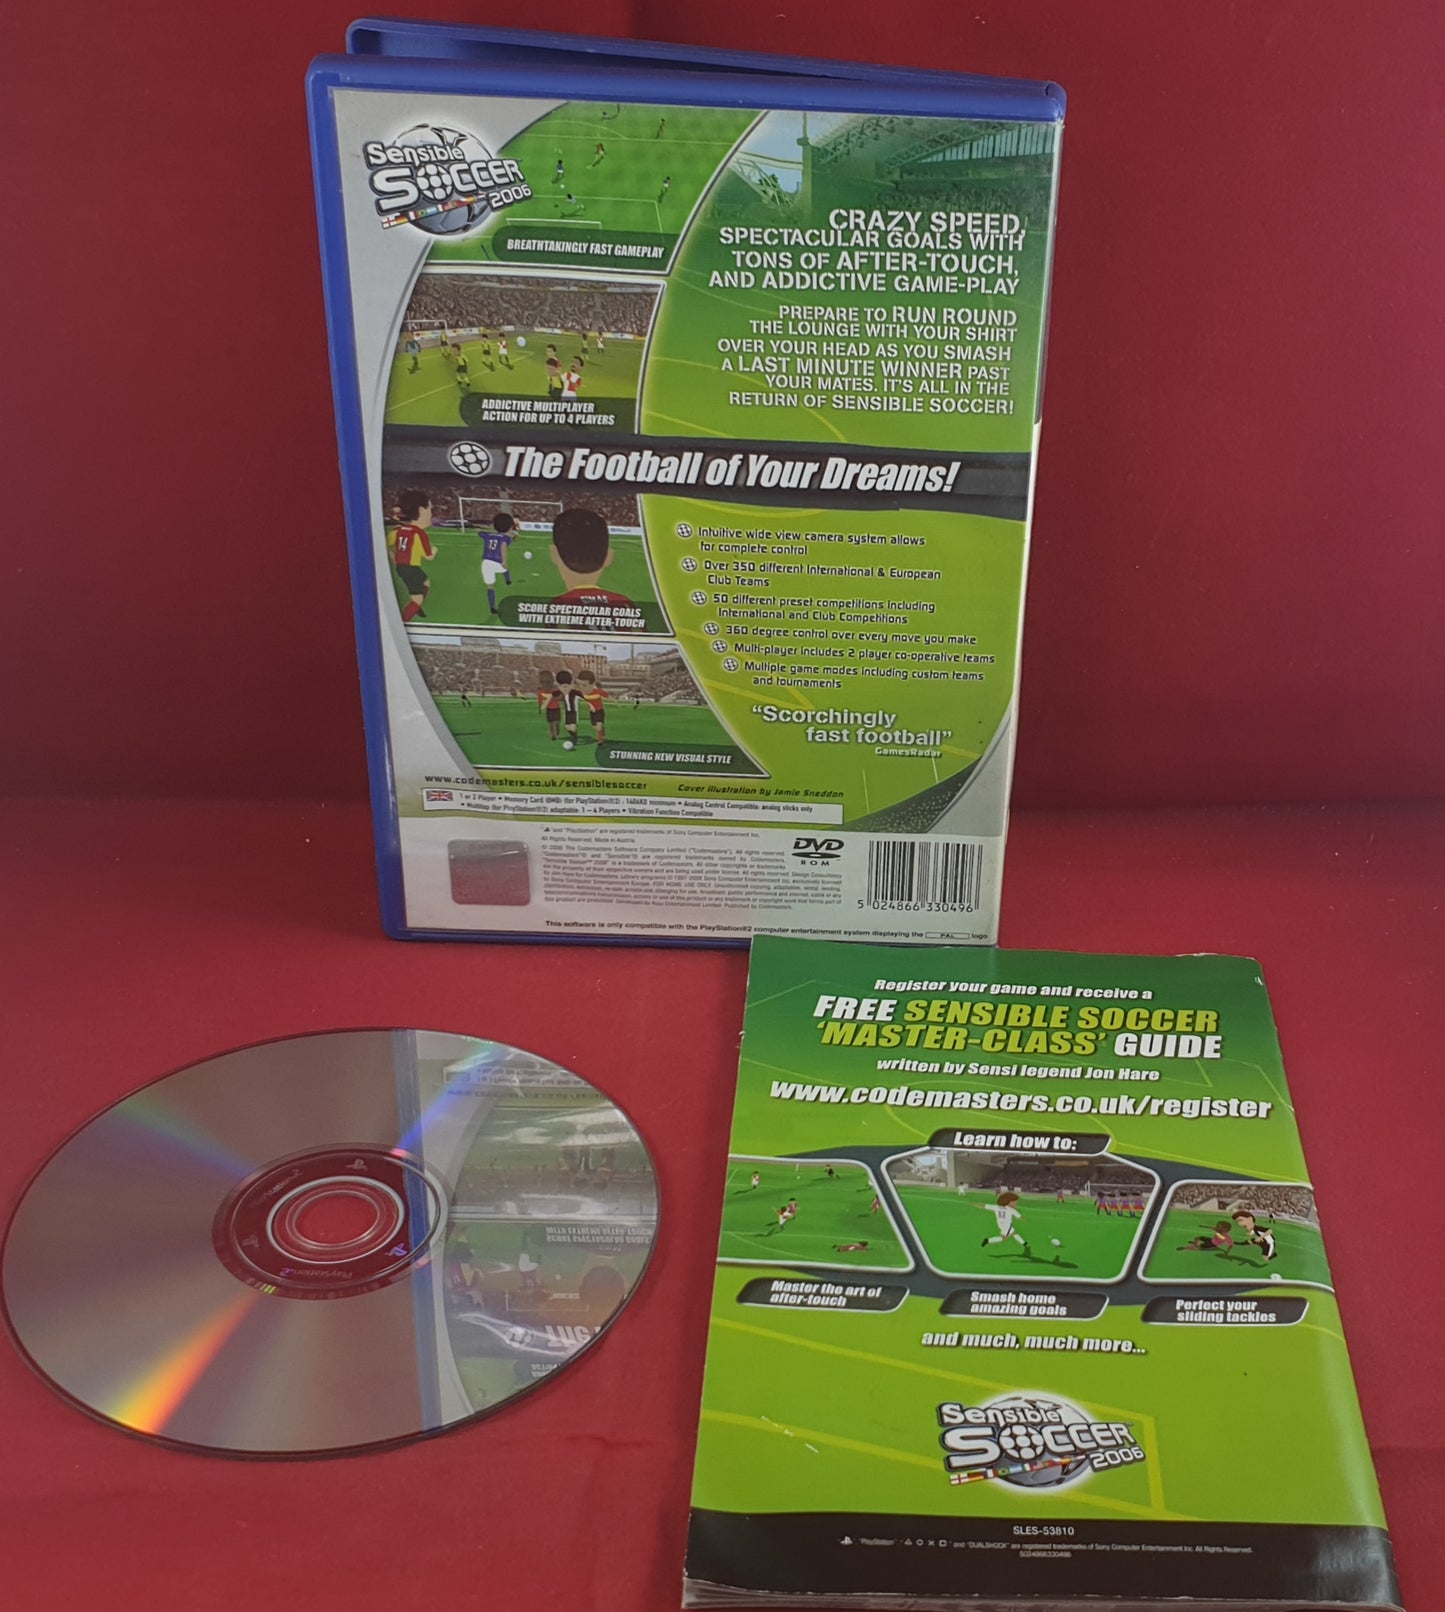 Sensible Soccer 2006 Sony Playstation 2 (PS2) Game